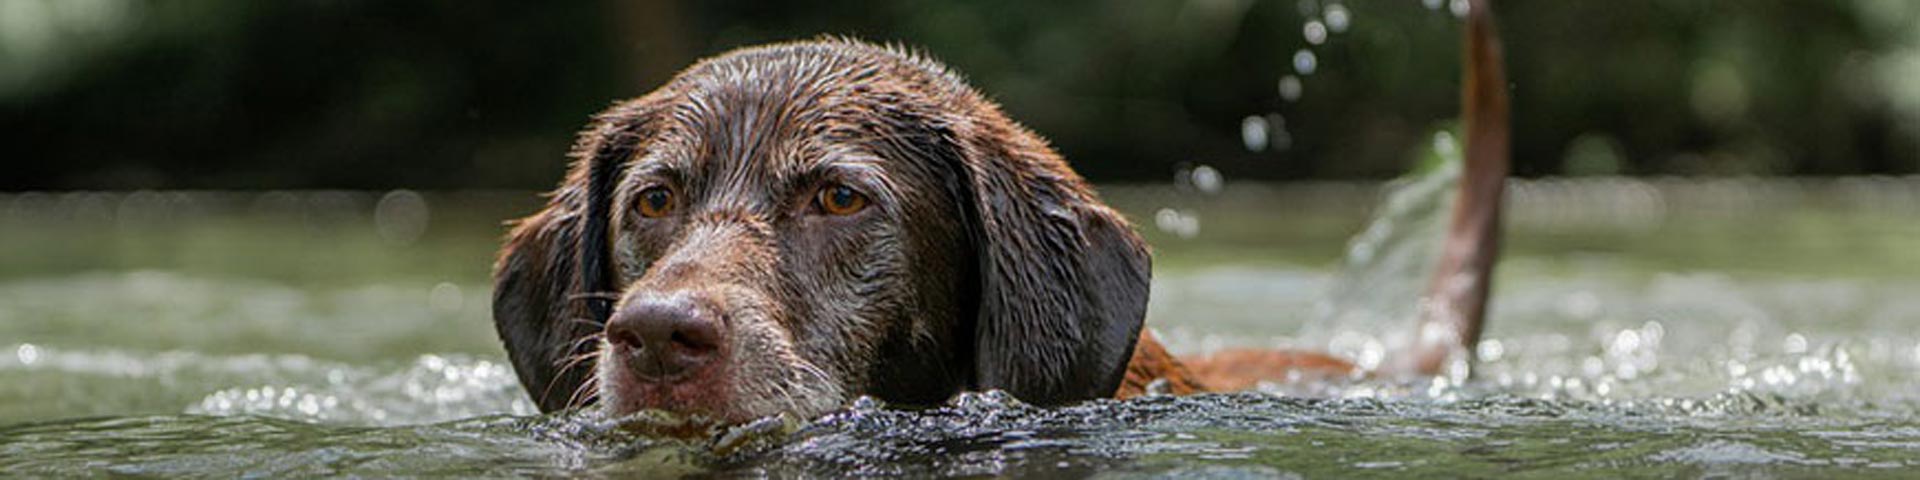 hond-zwemmen-wassen-1920x480